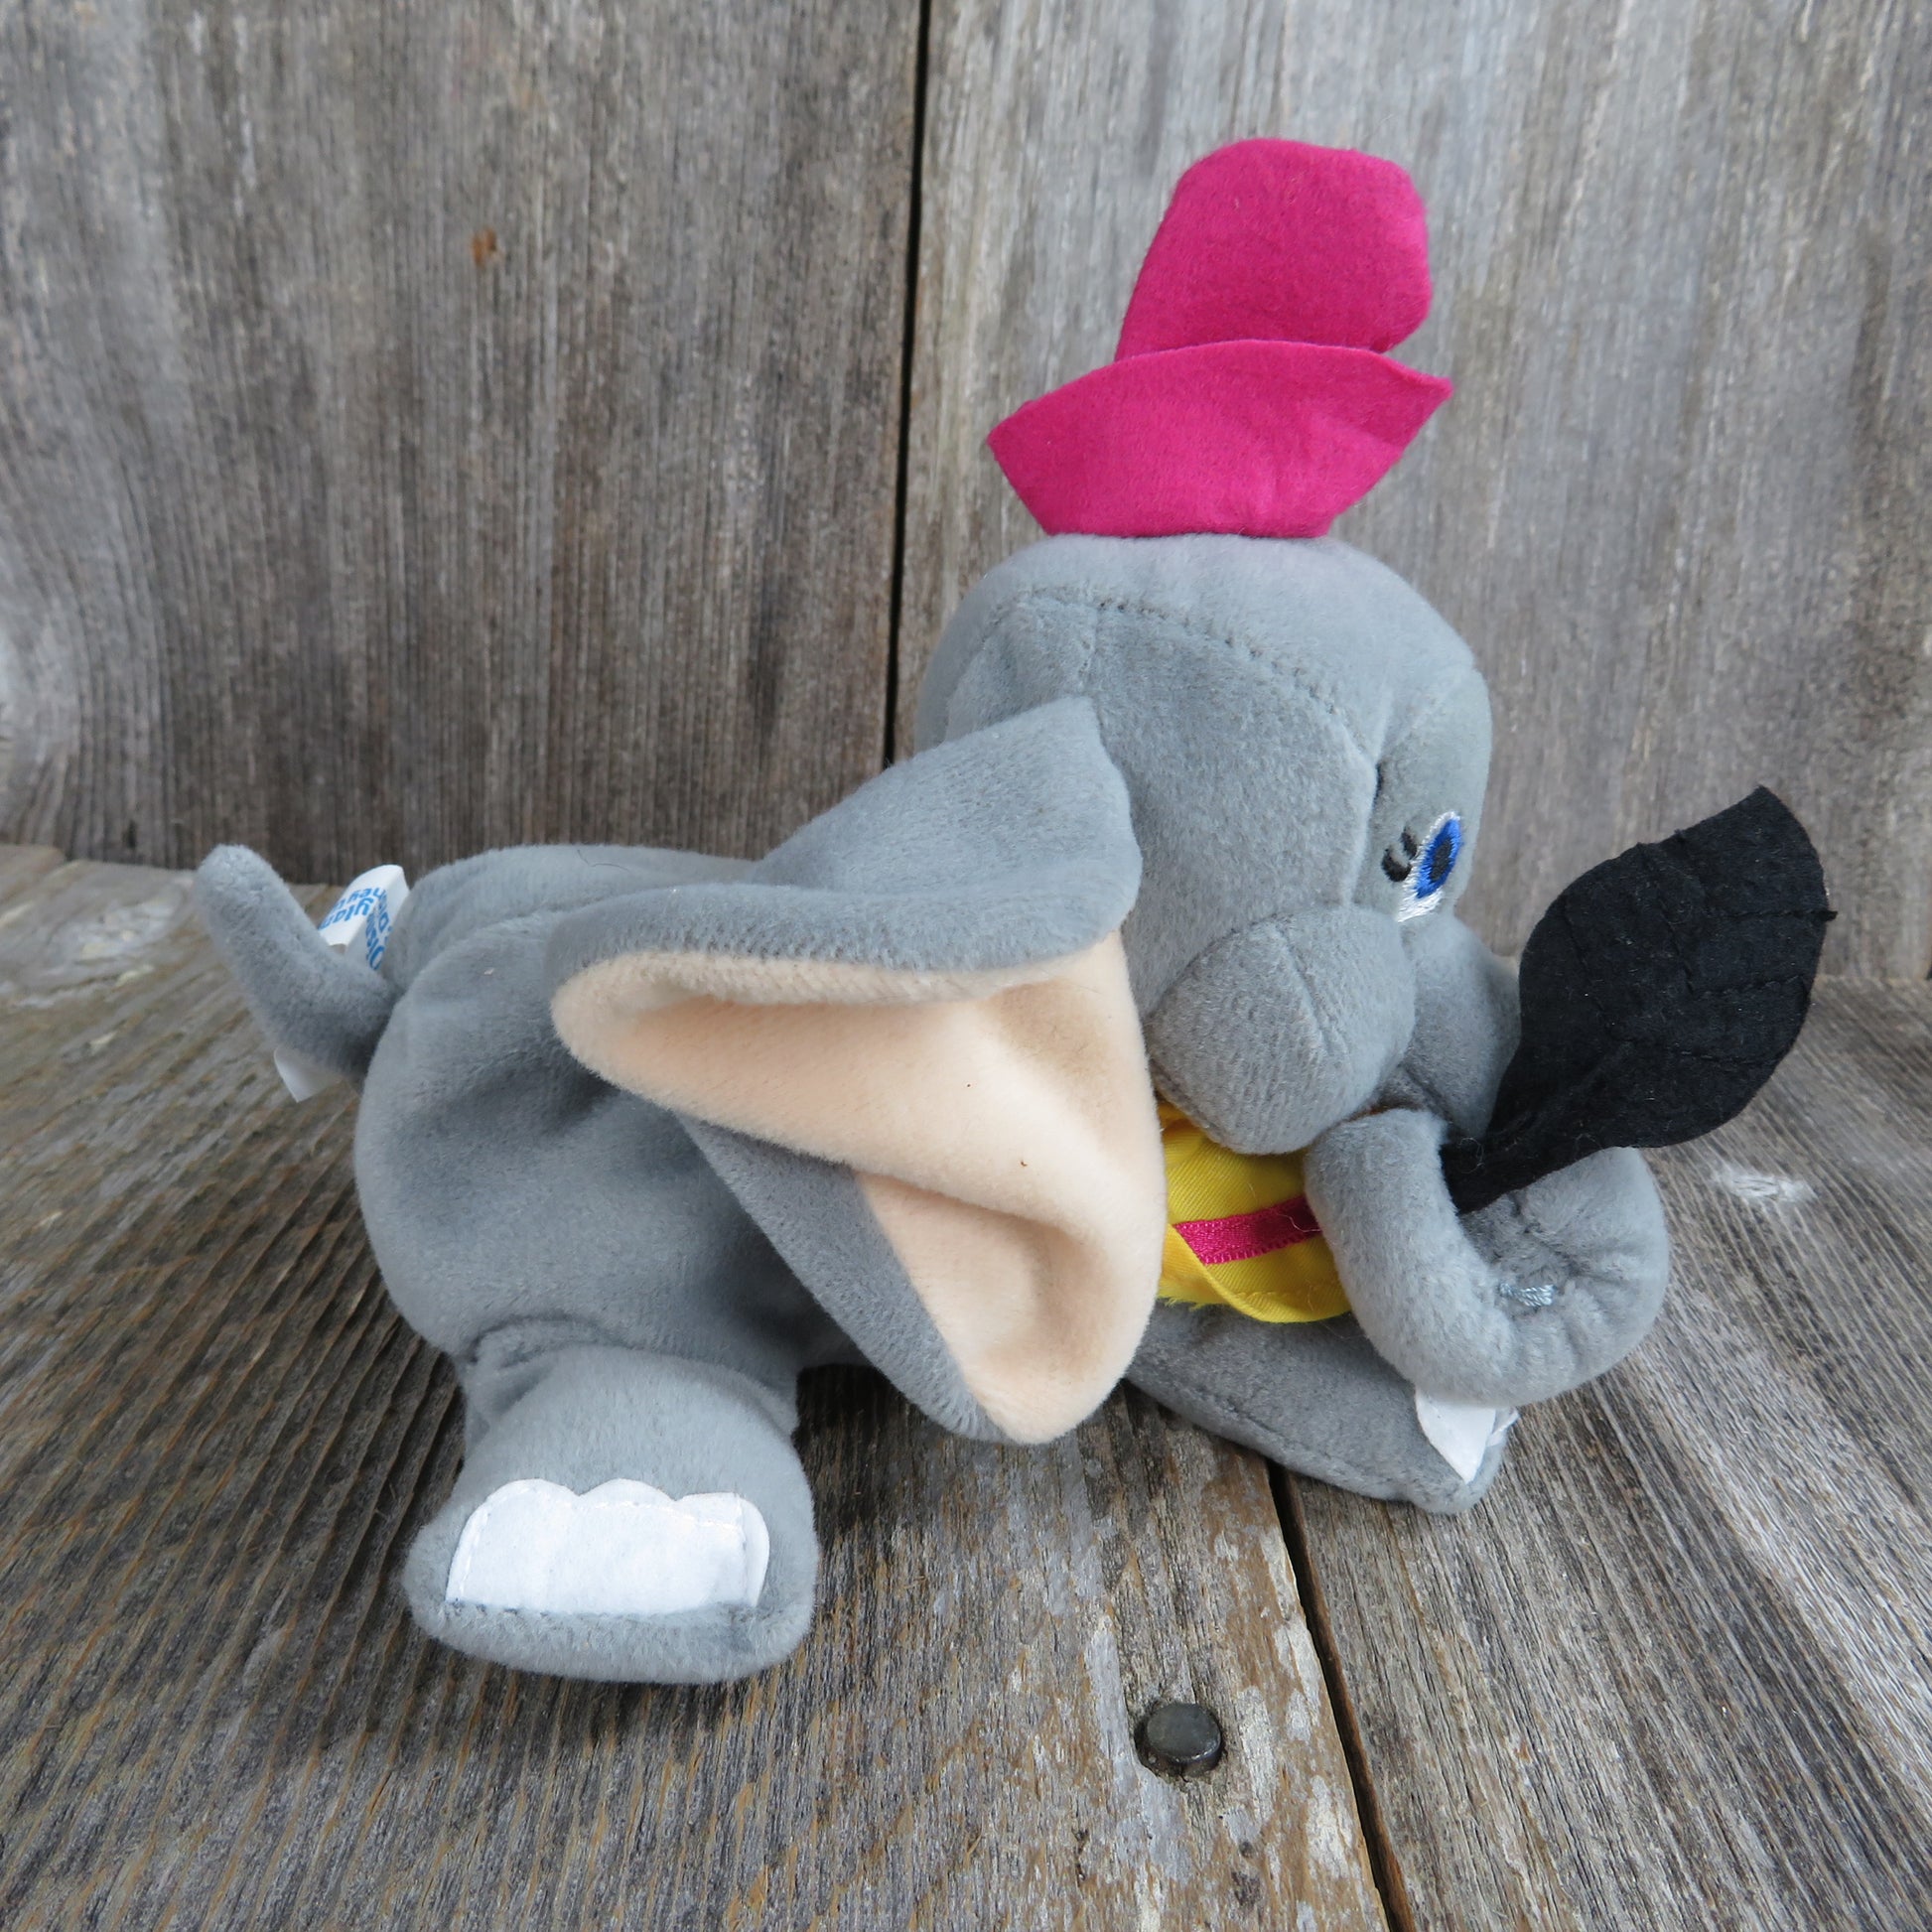 Vintage Dumbo Elephant Plush Beanie Disneyland Mouseketoys Bean Bag Stuffed Animal 1990s - At Grandma's Table